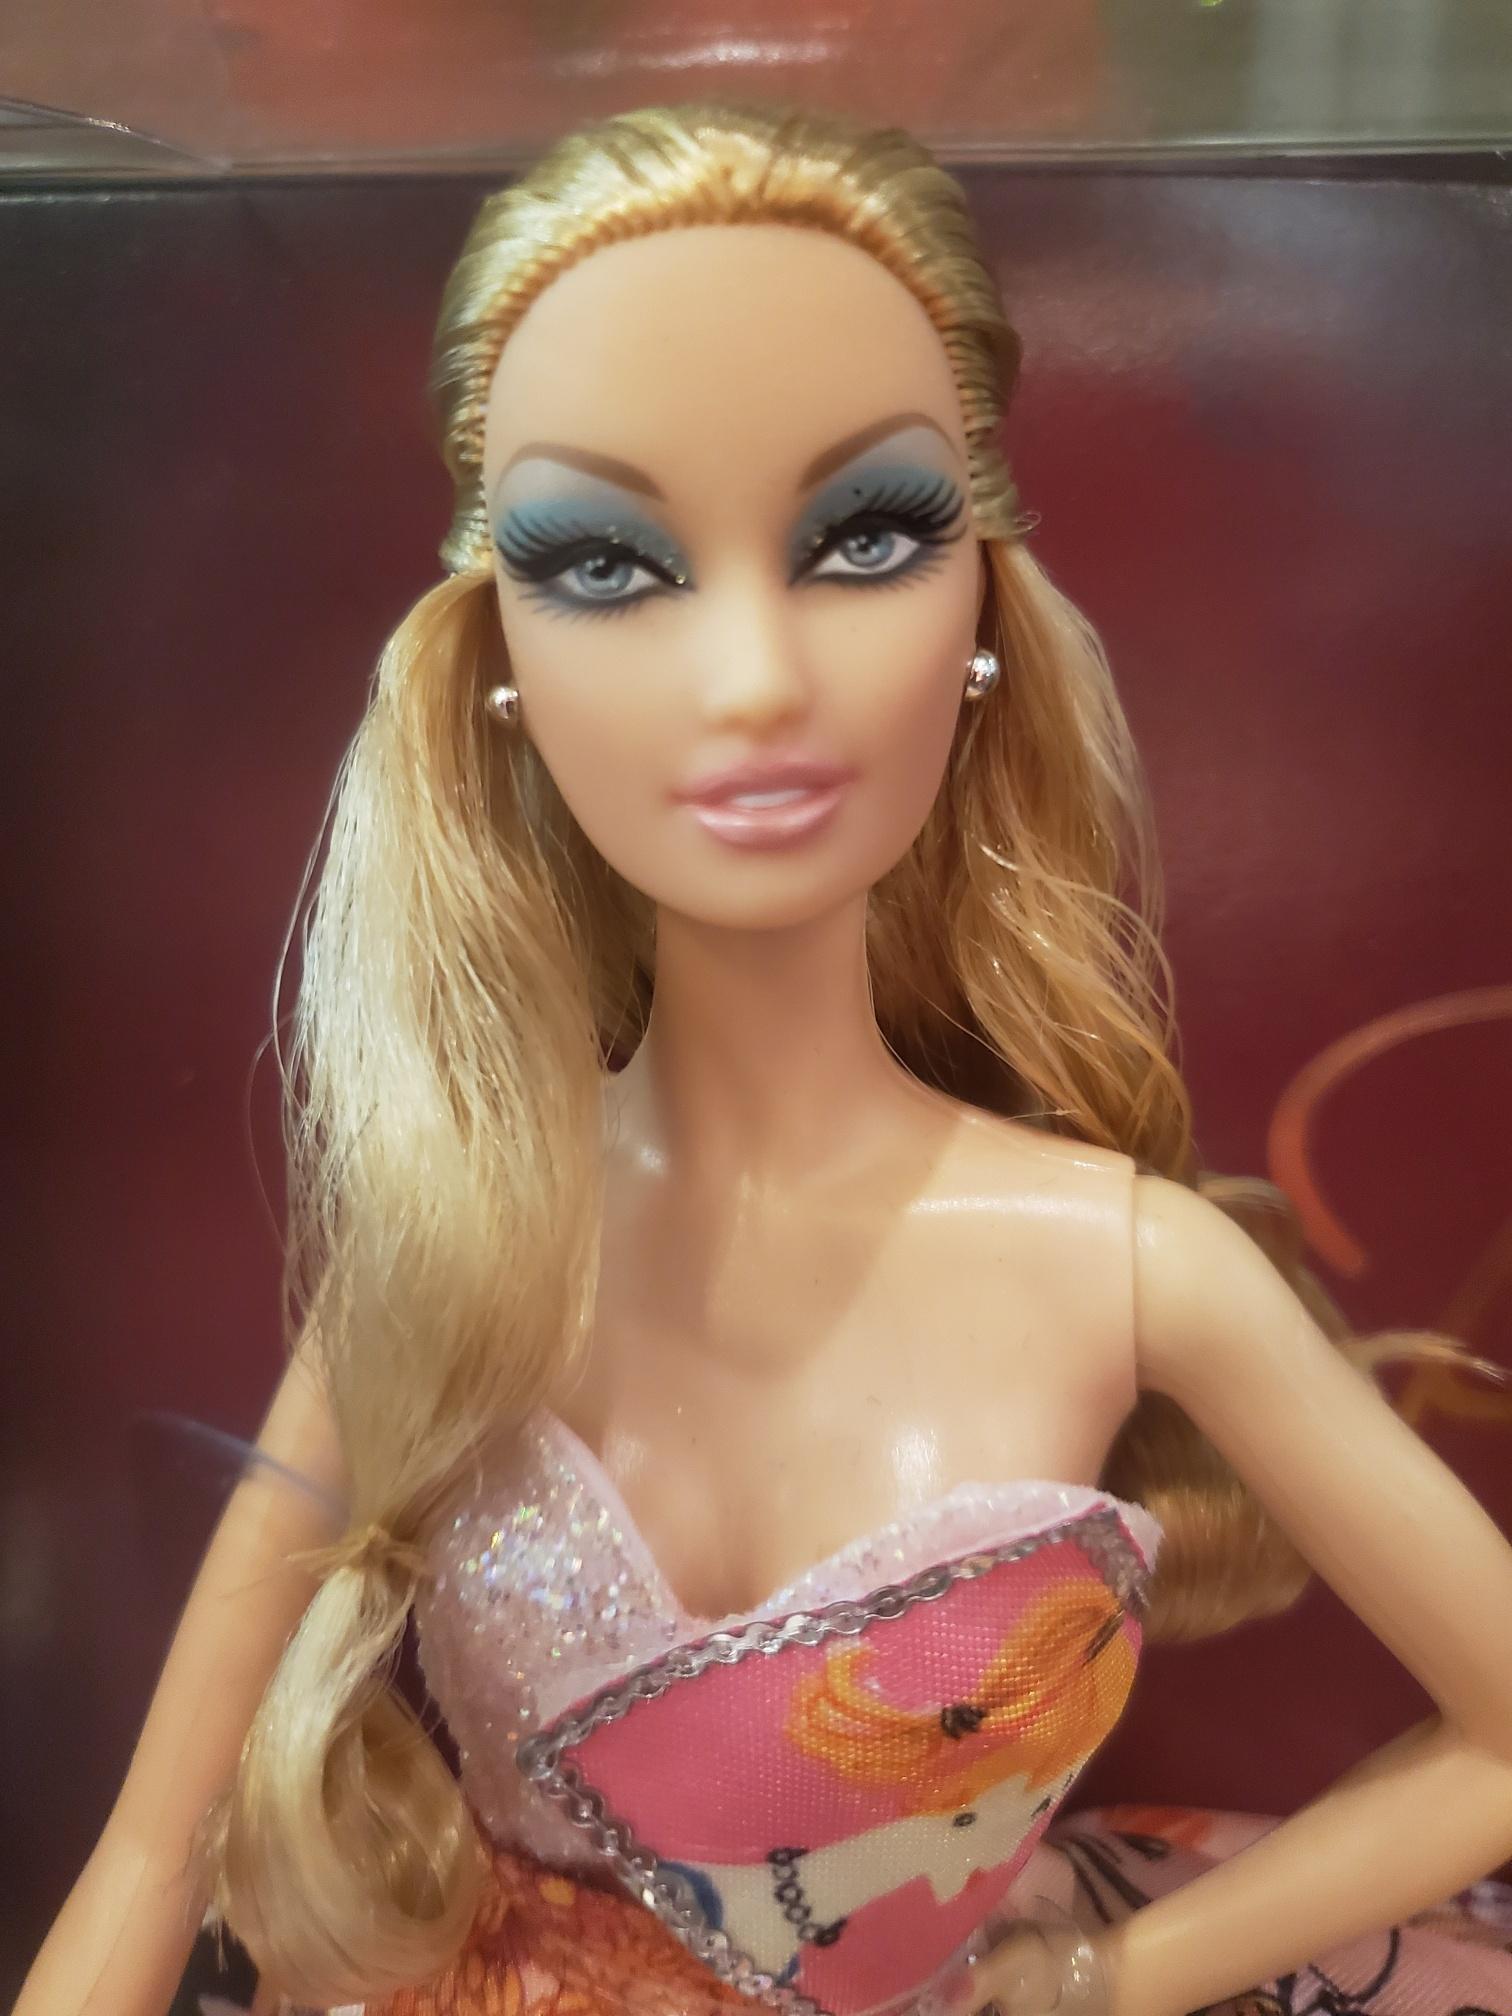 barbie 50th anniversary doll